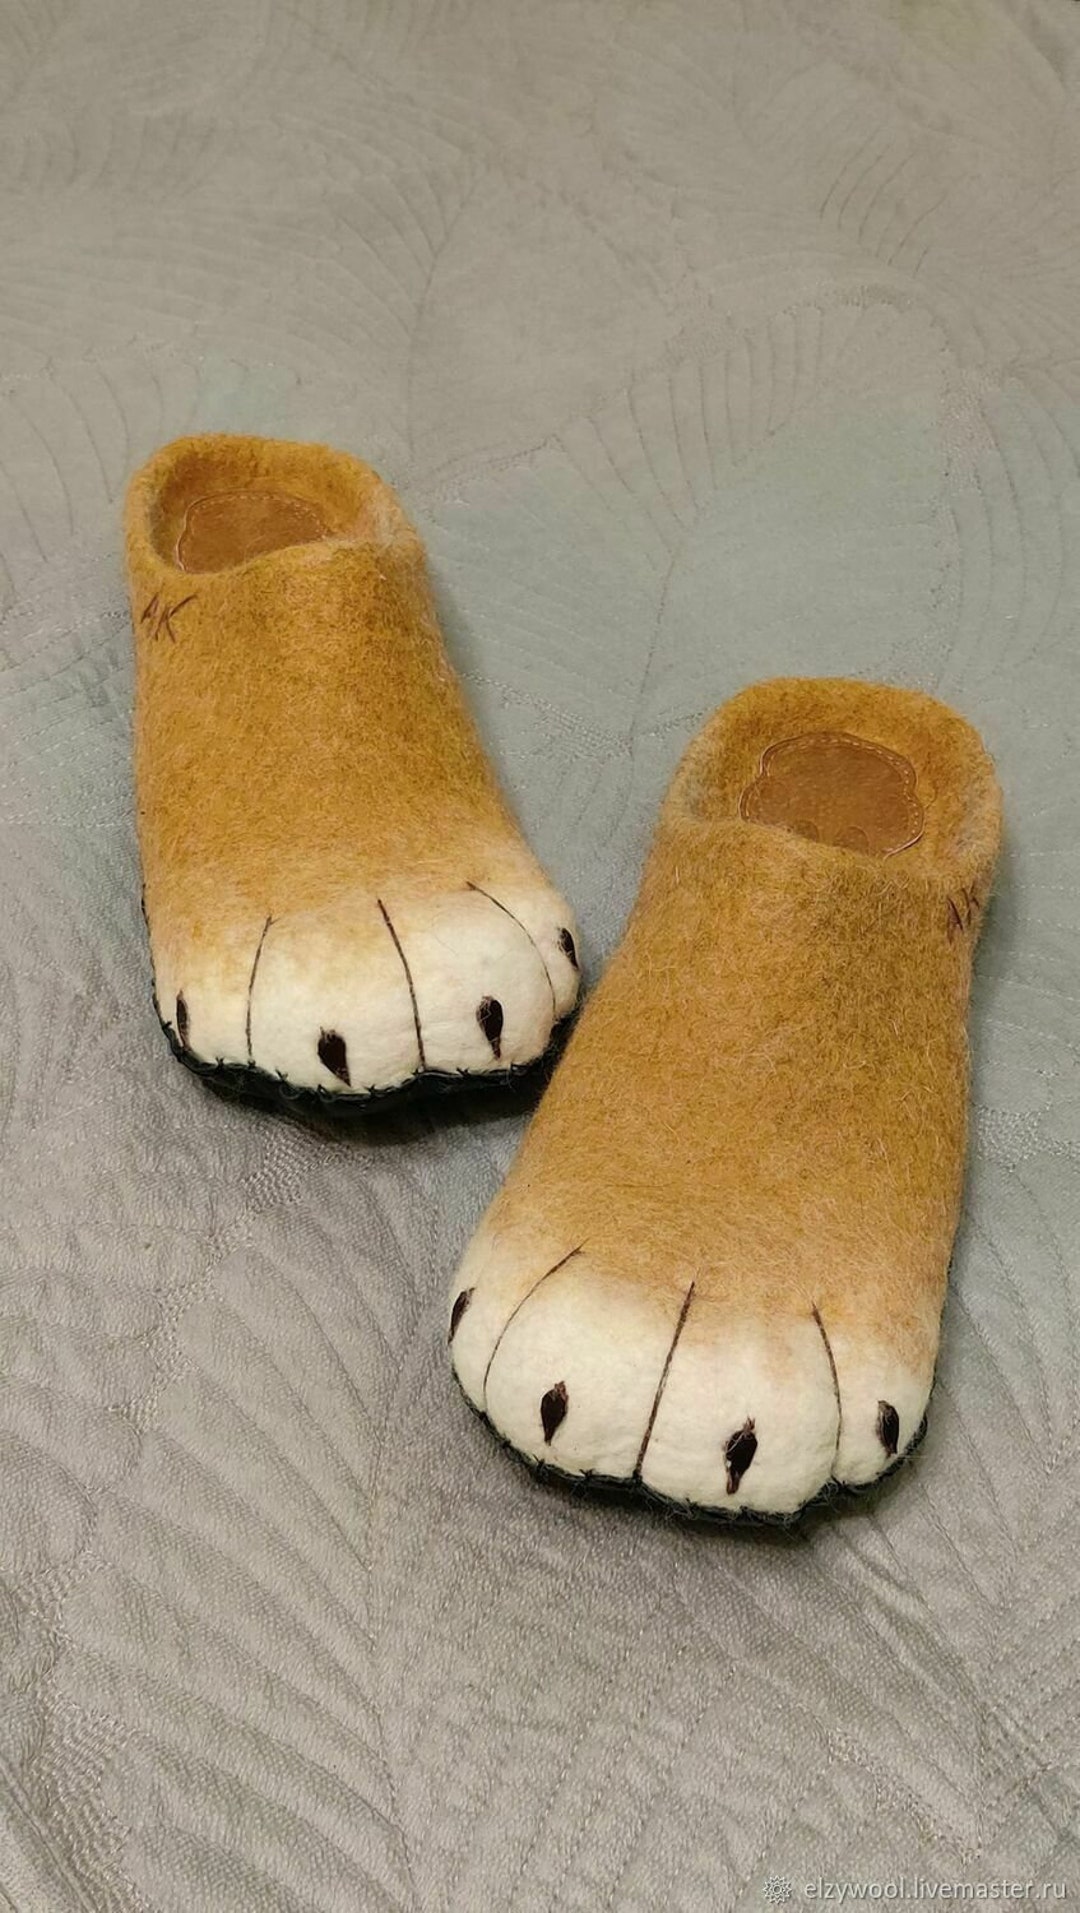 Hobbit feet. For fancy dress. Fits adults and kids. | eBay